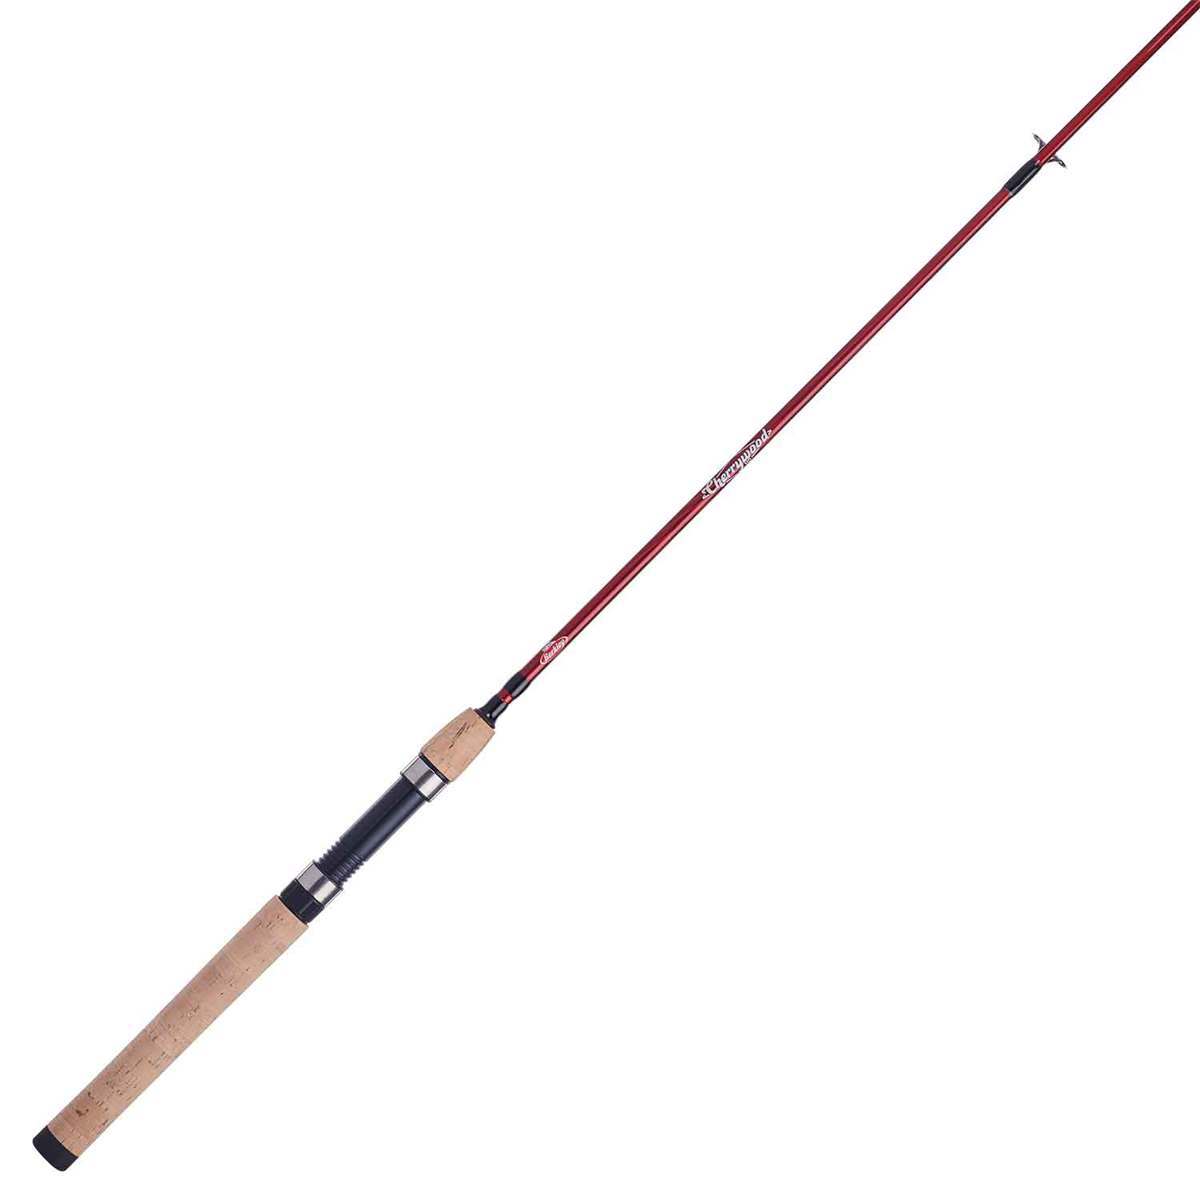 Berkeley Cherrywood 8' 6 2-Piece Graphite Fly Fishing Rod 7-8 Weight NEW